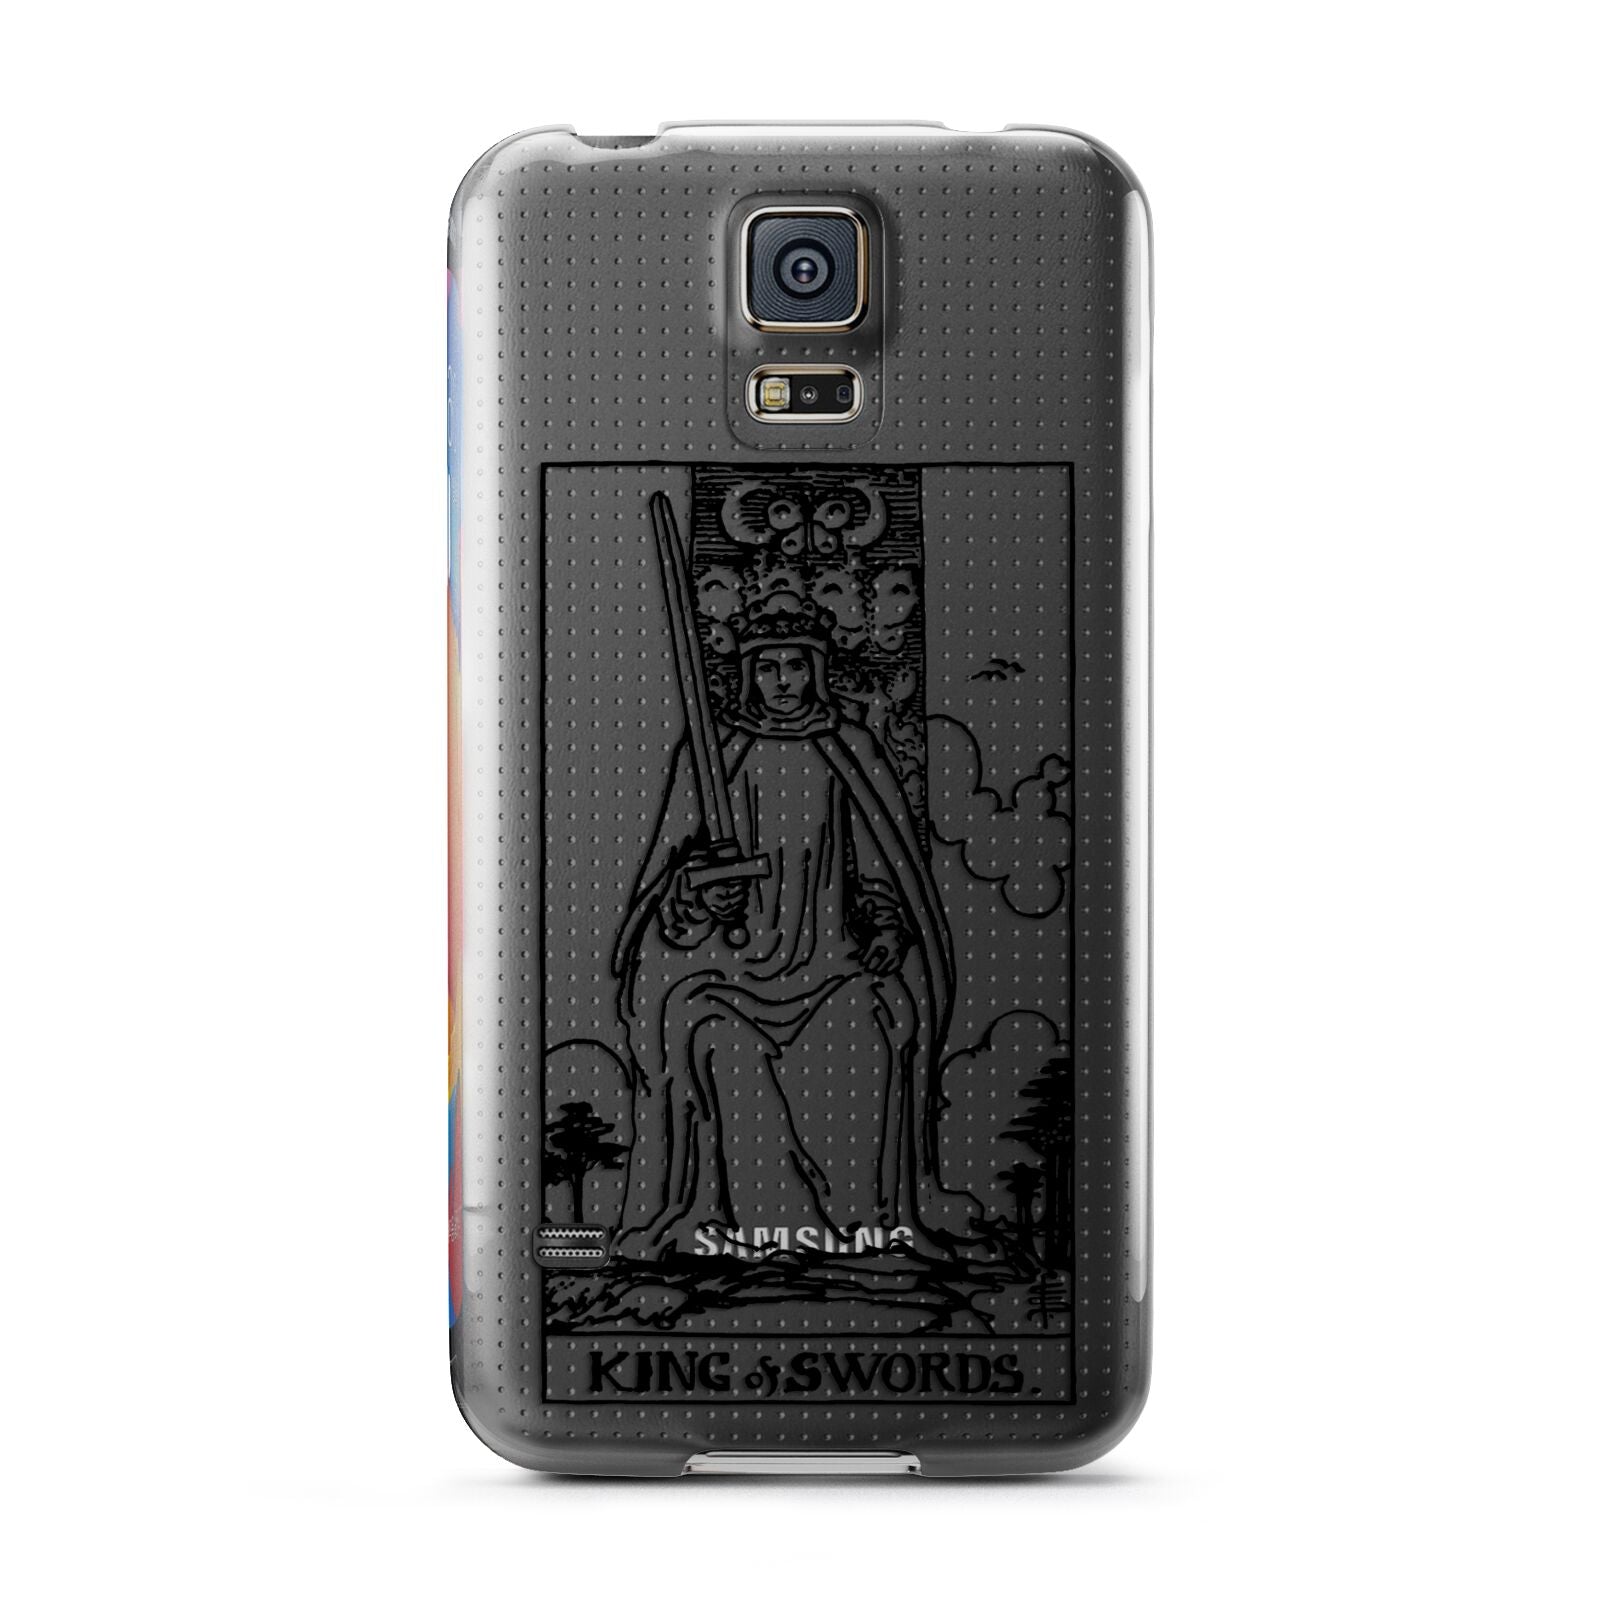 King of Swords Monochrome Samsung Galaxy S5 Case